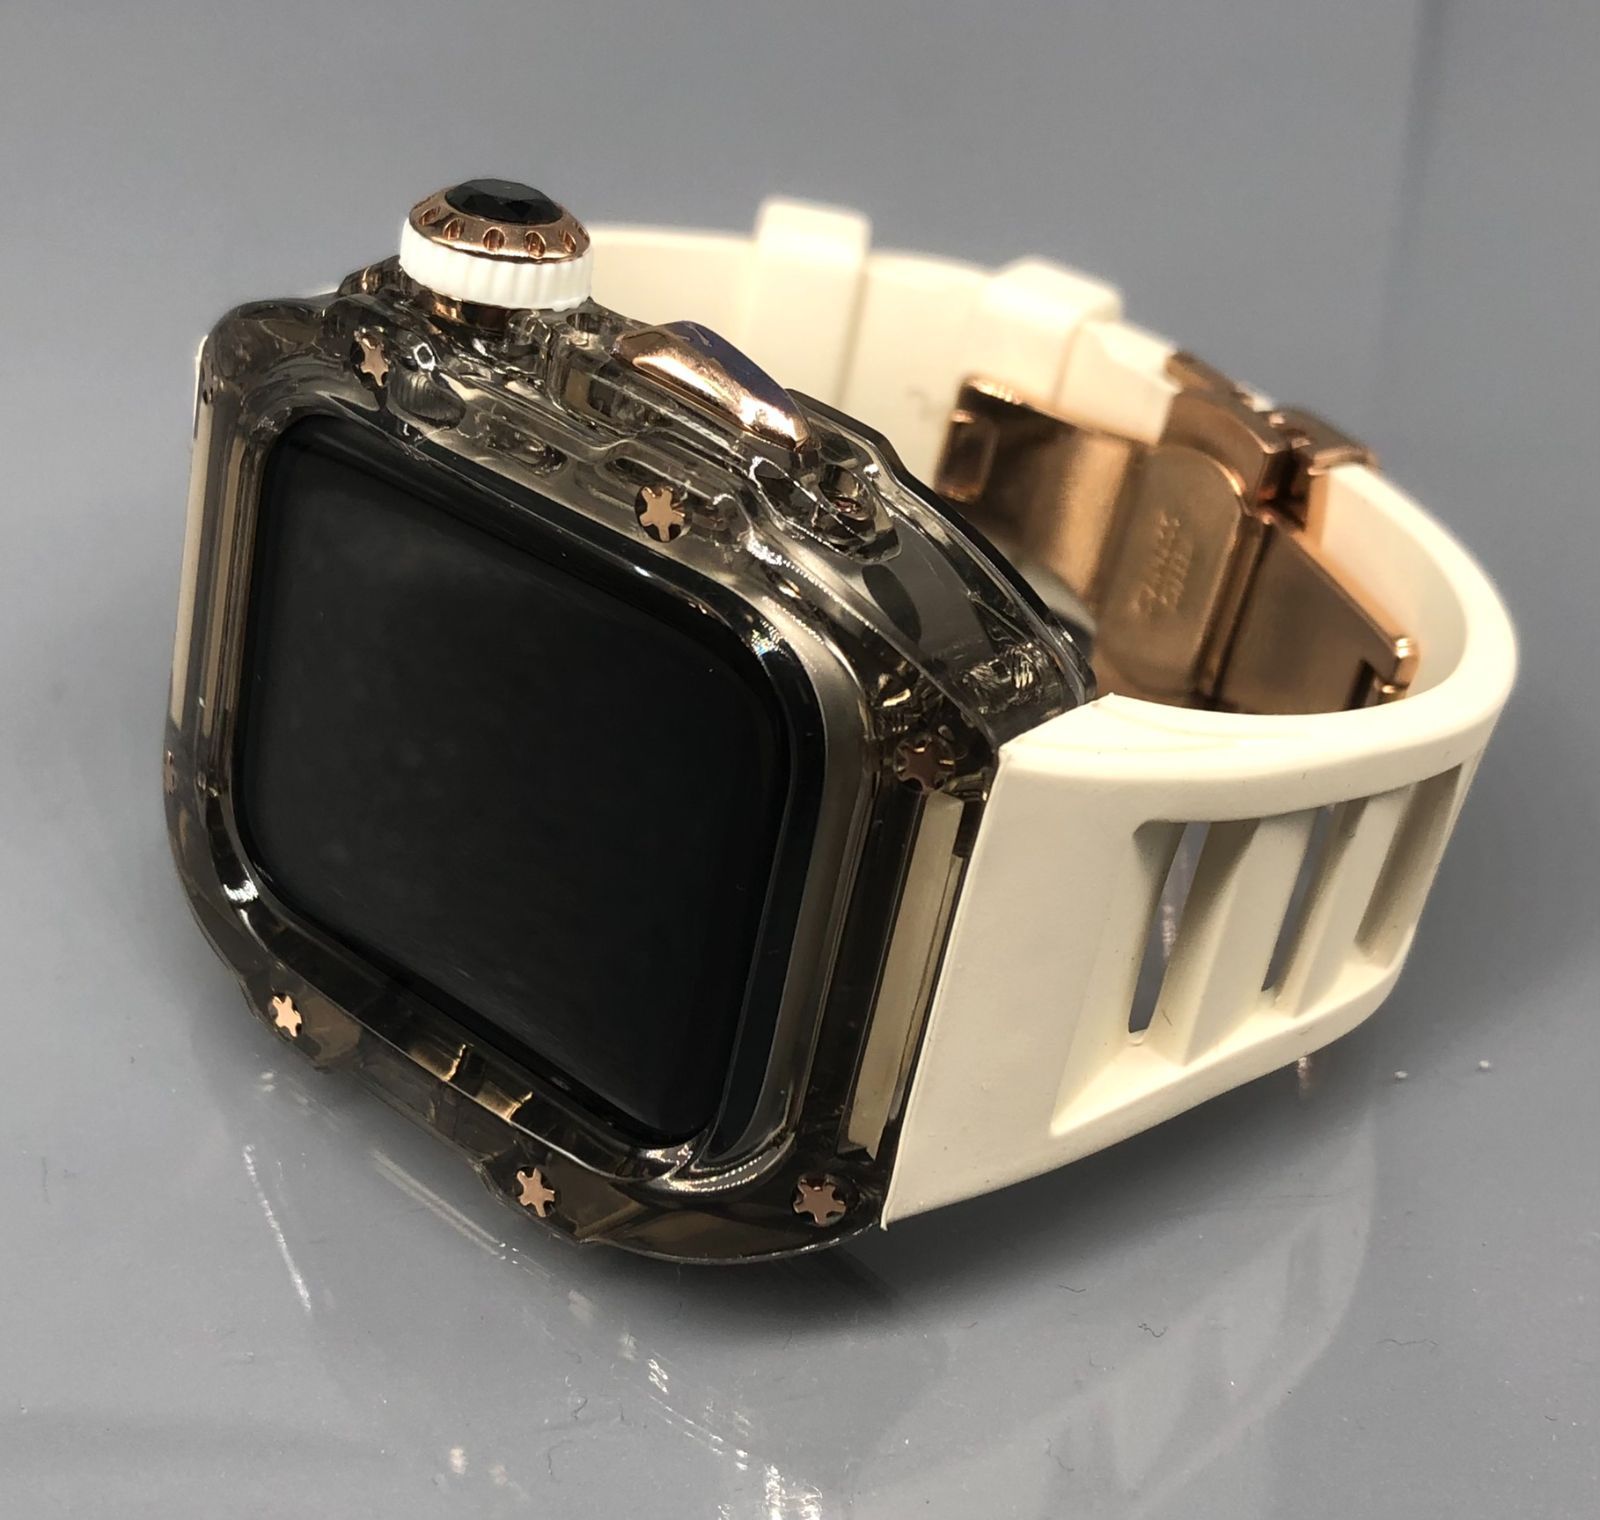 Apple Watch SE 44mm ケース カバー m0n